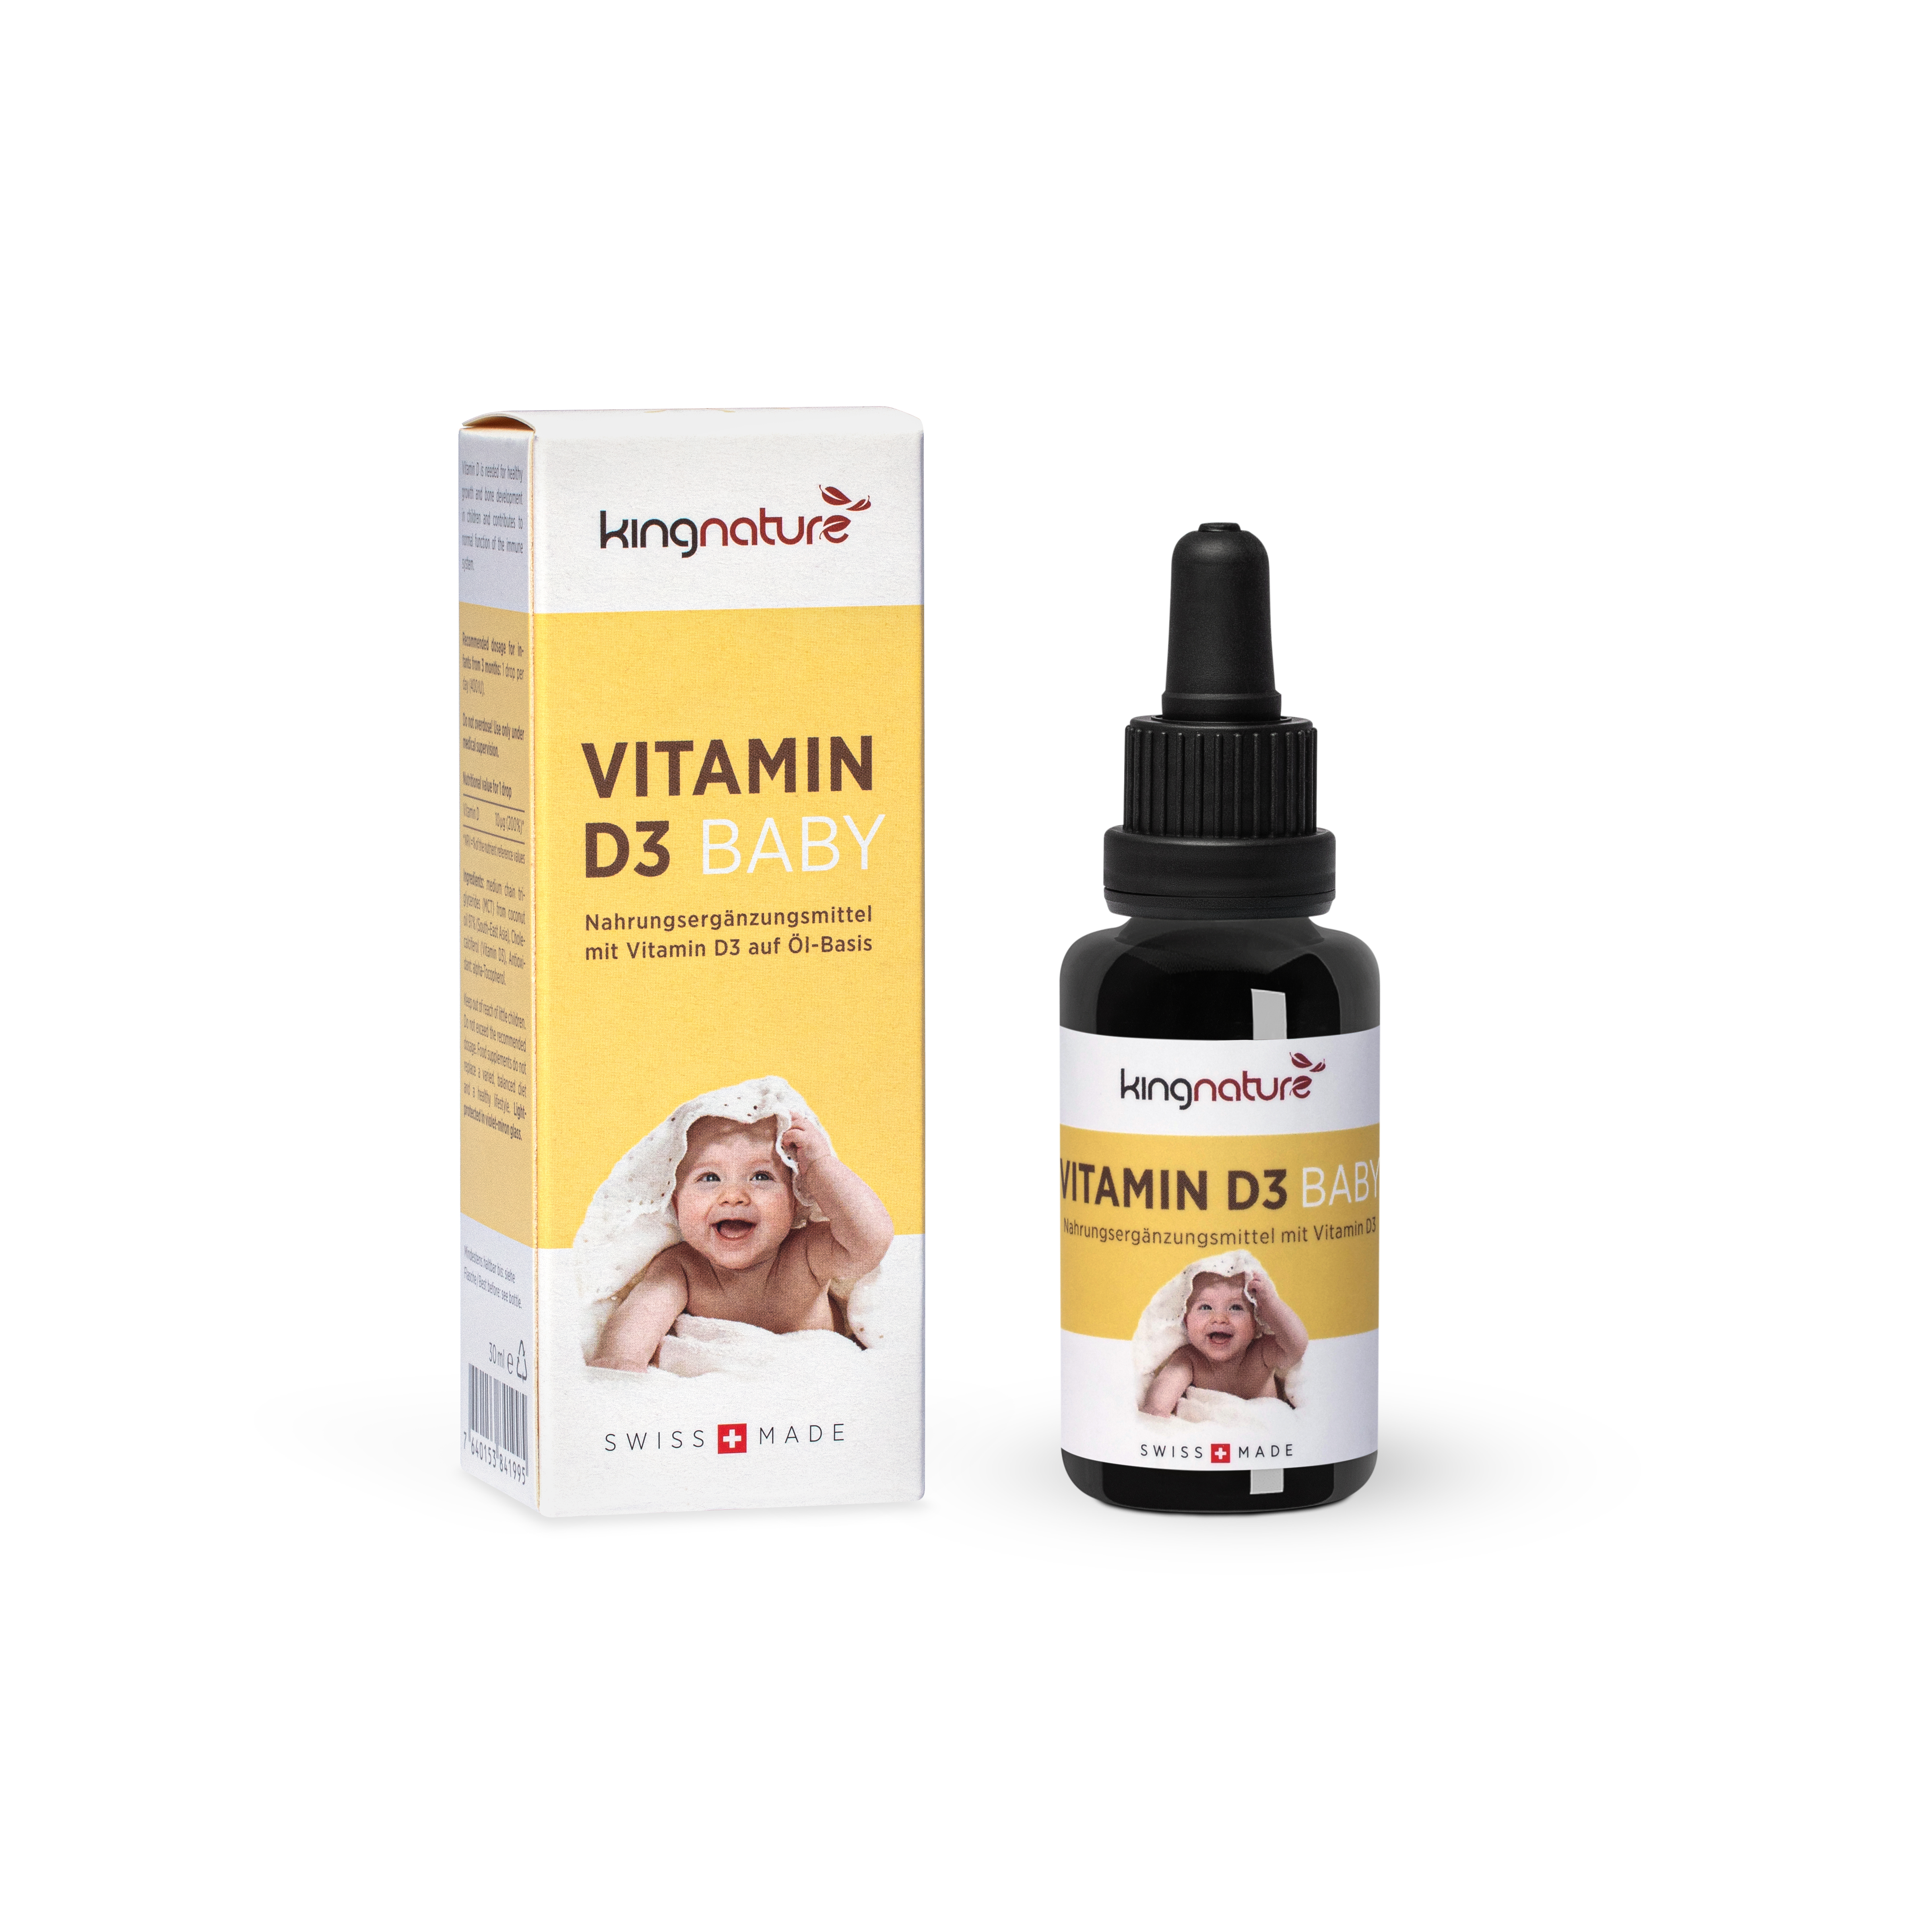 Kingnature Vitamin D3 Baby